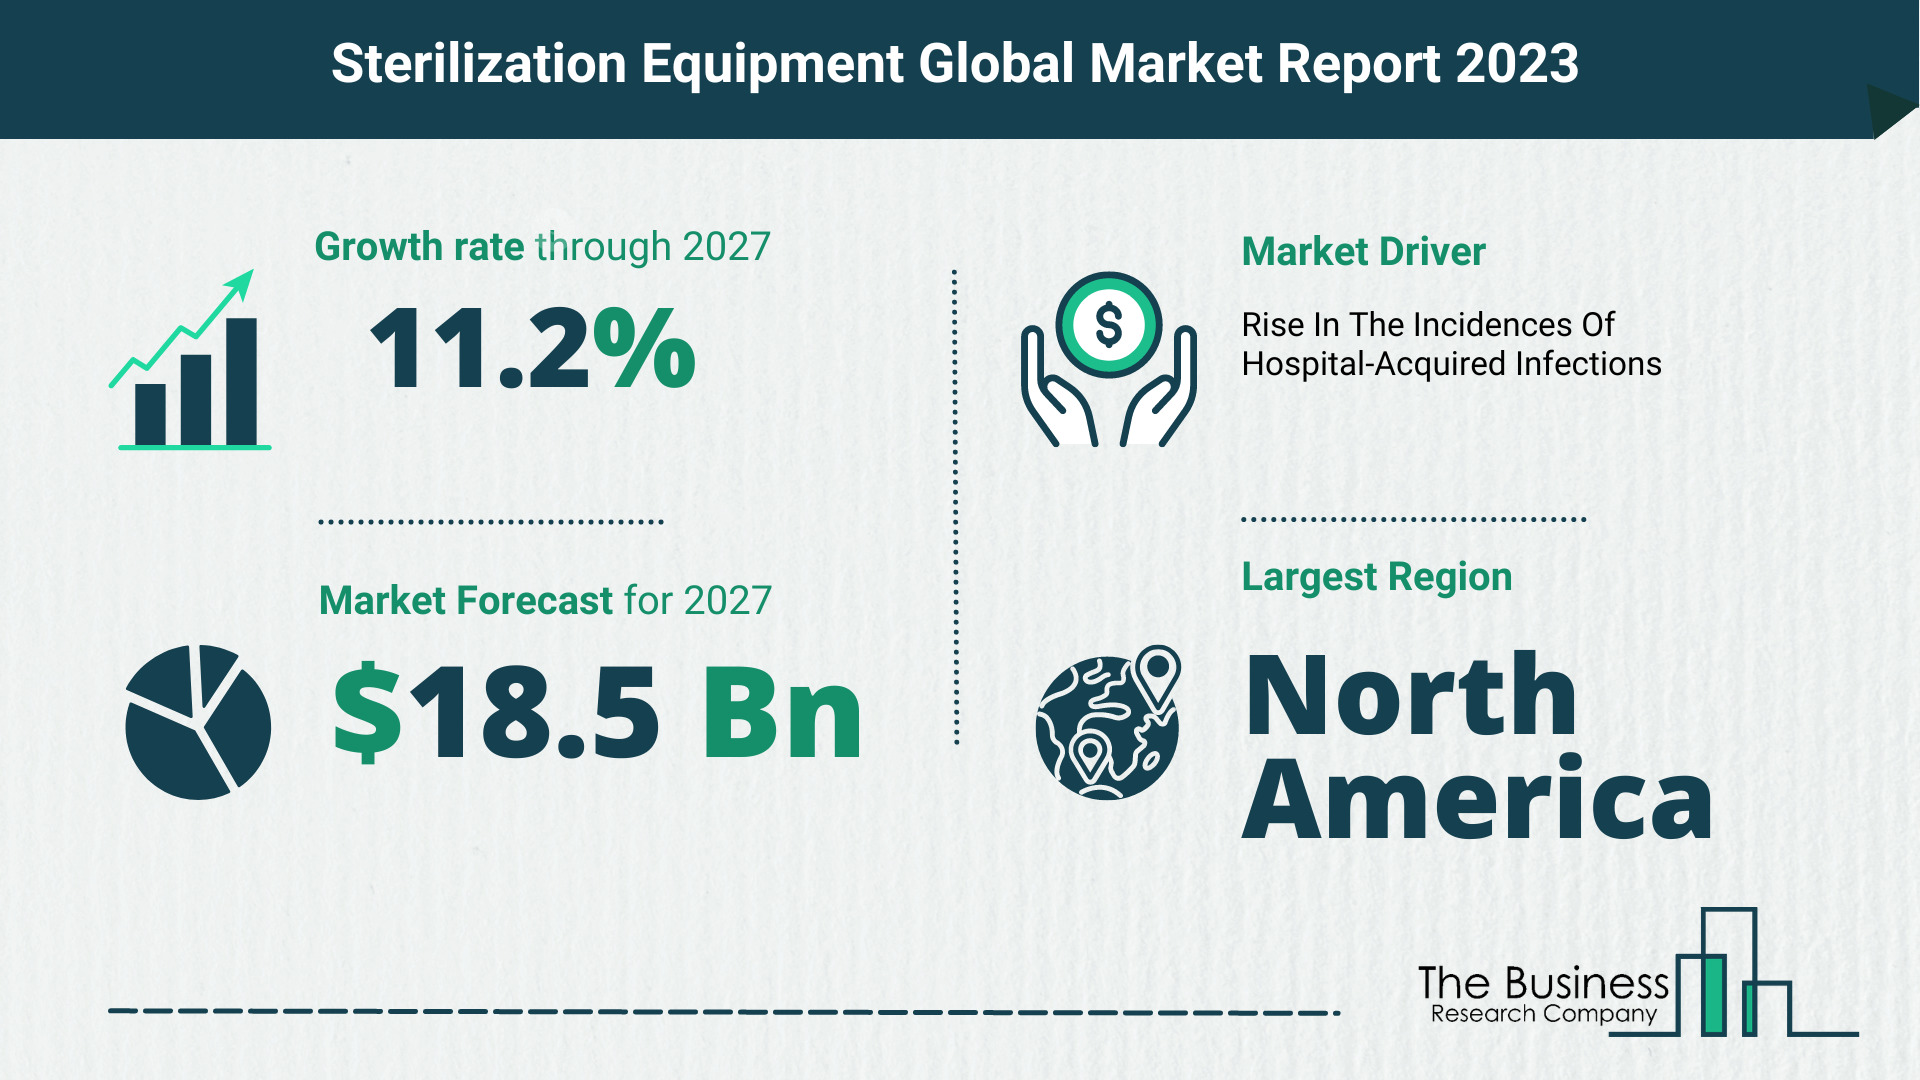 Global Sterilization Equipment Market Size